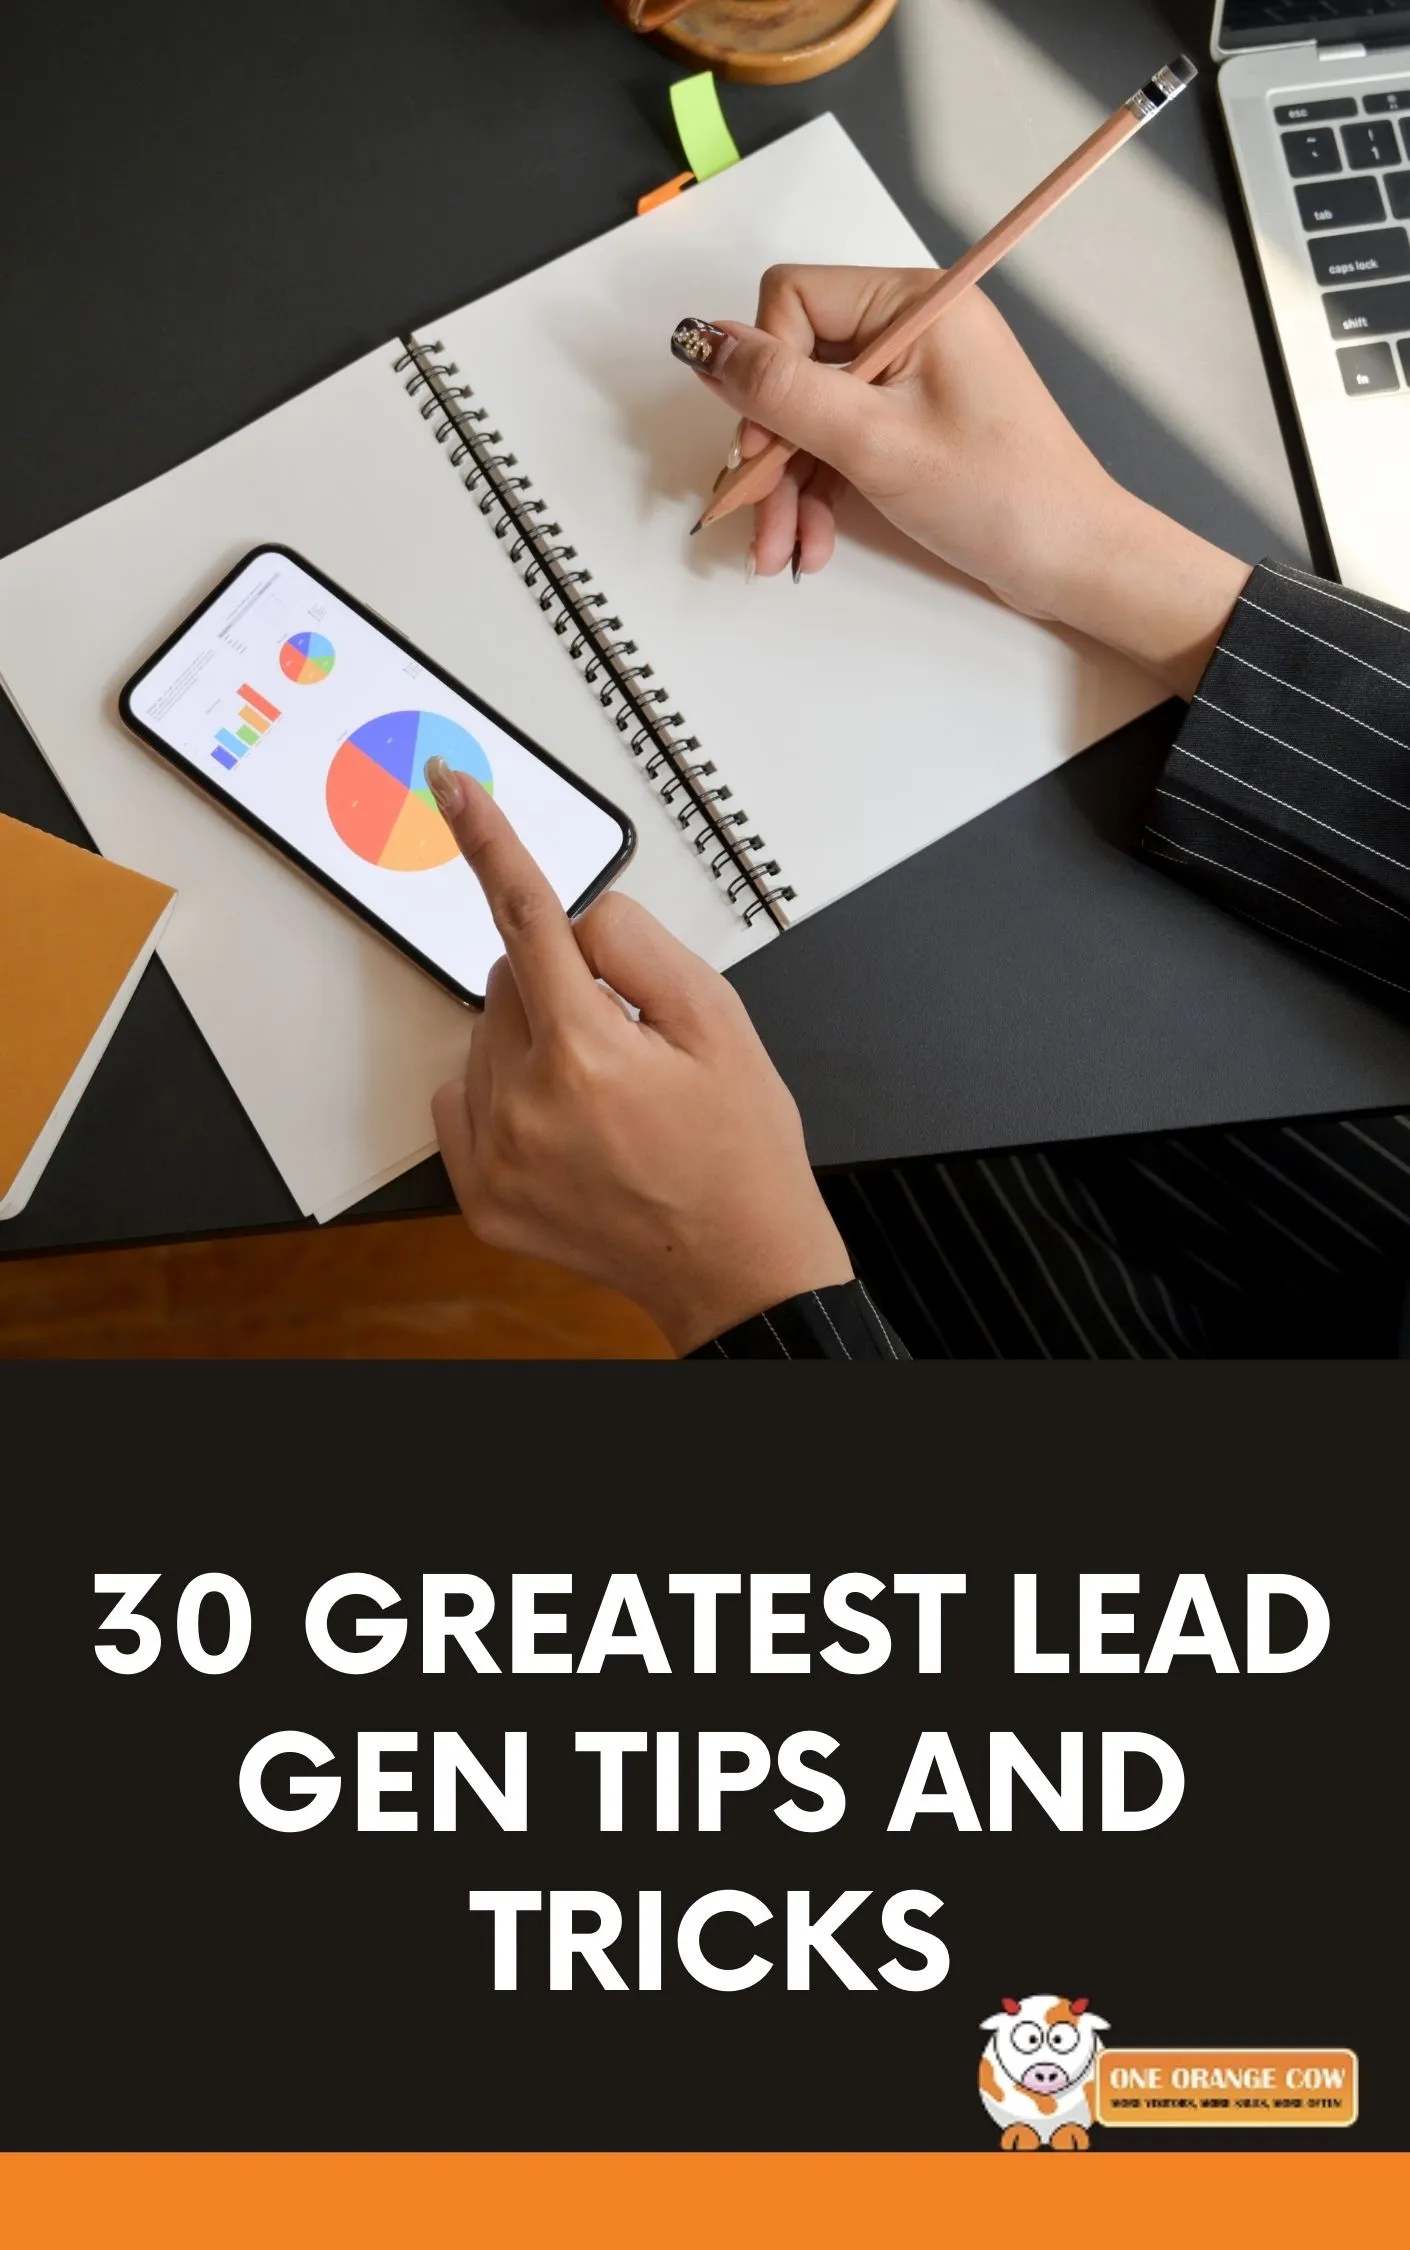 The 30 Greatest Lead Generation Tips, Tricks & Ideas